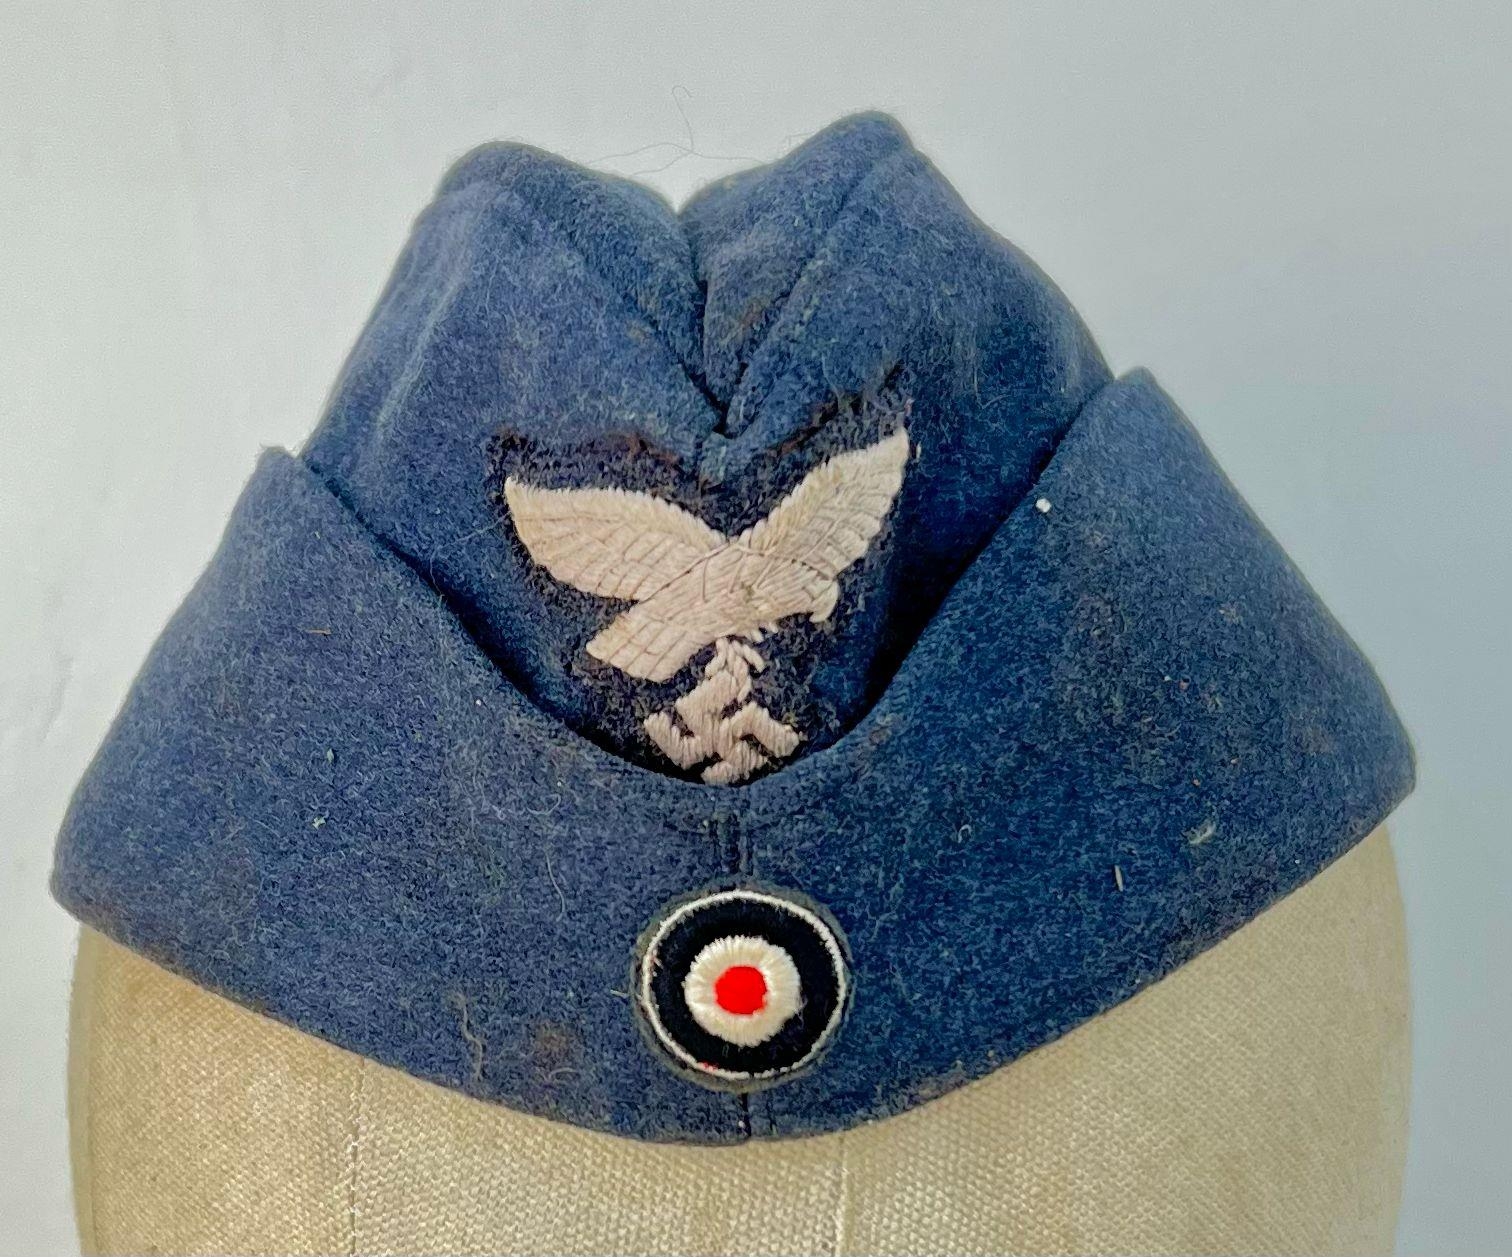 WW2 German Luftwaffe Enlisted Mans Side Cap.